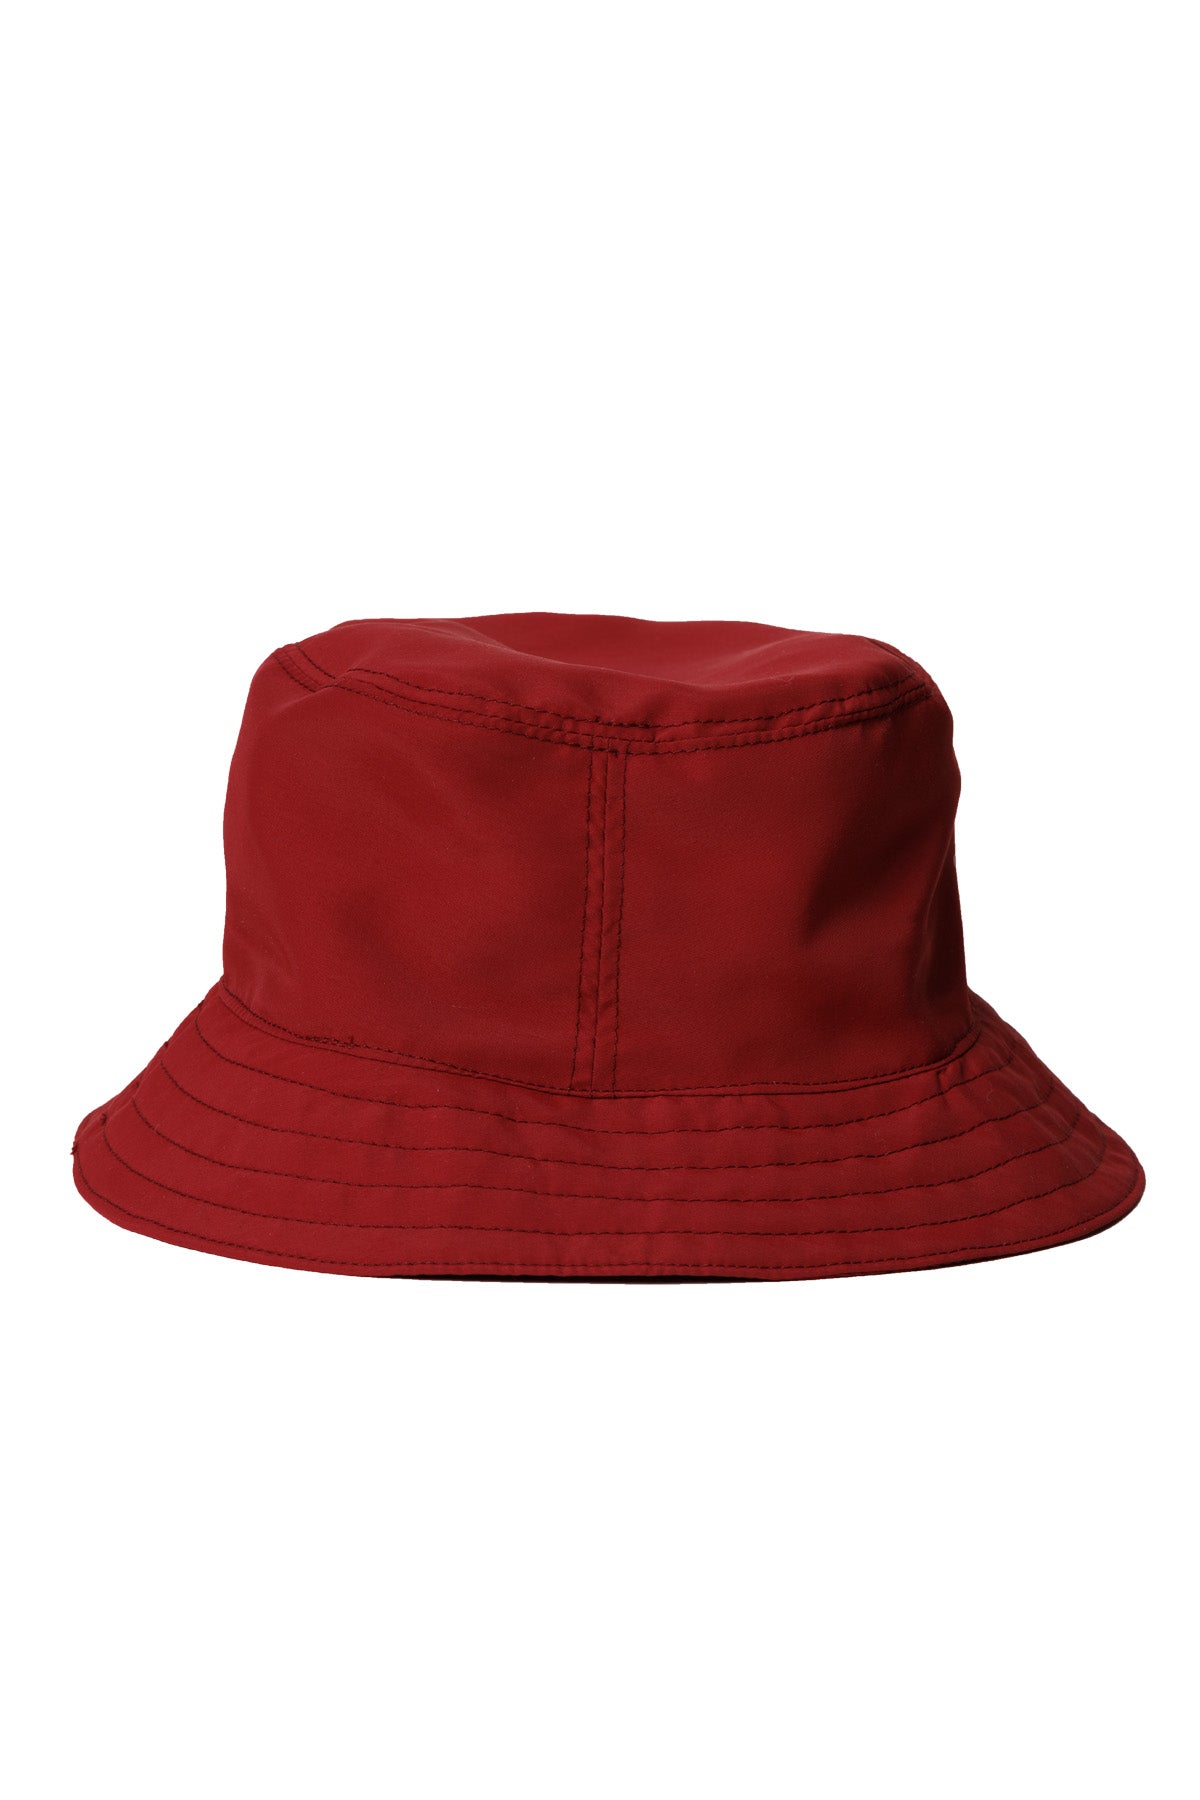 All American Bucket Hat